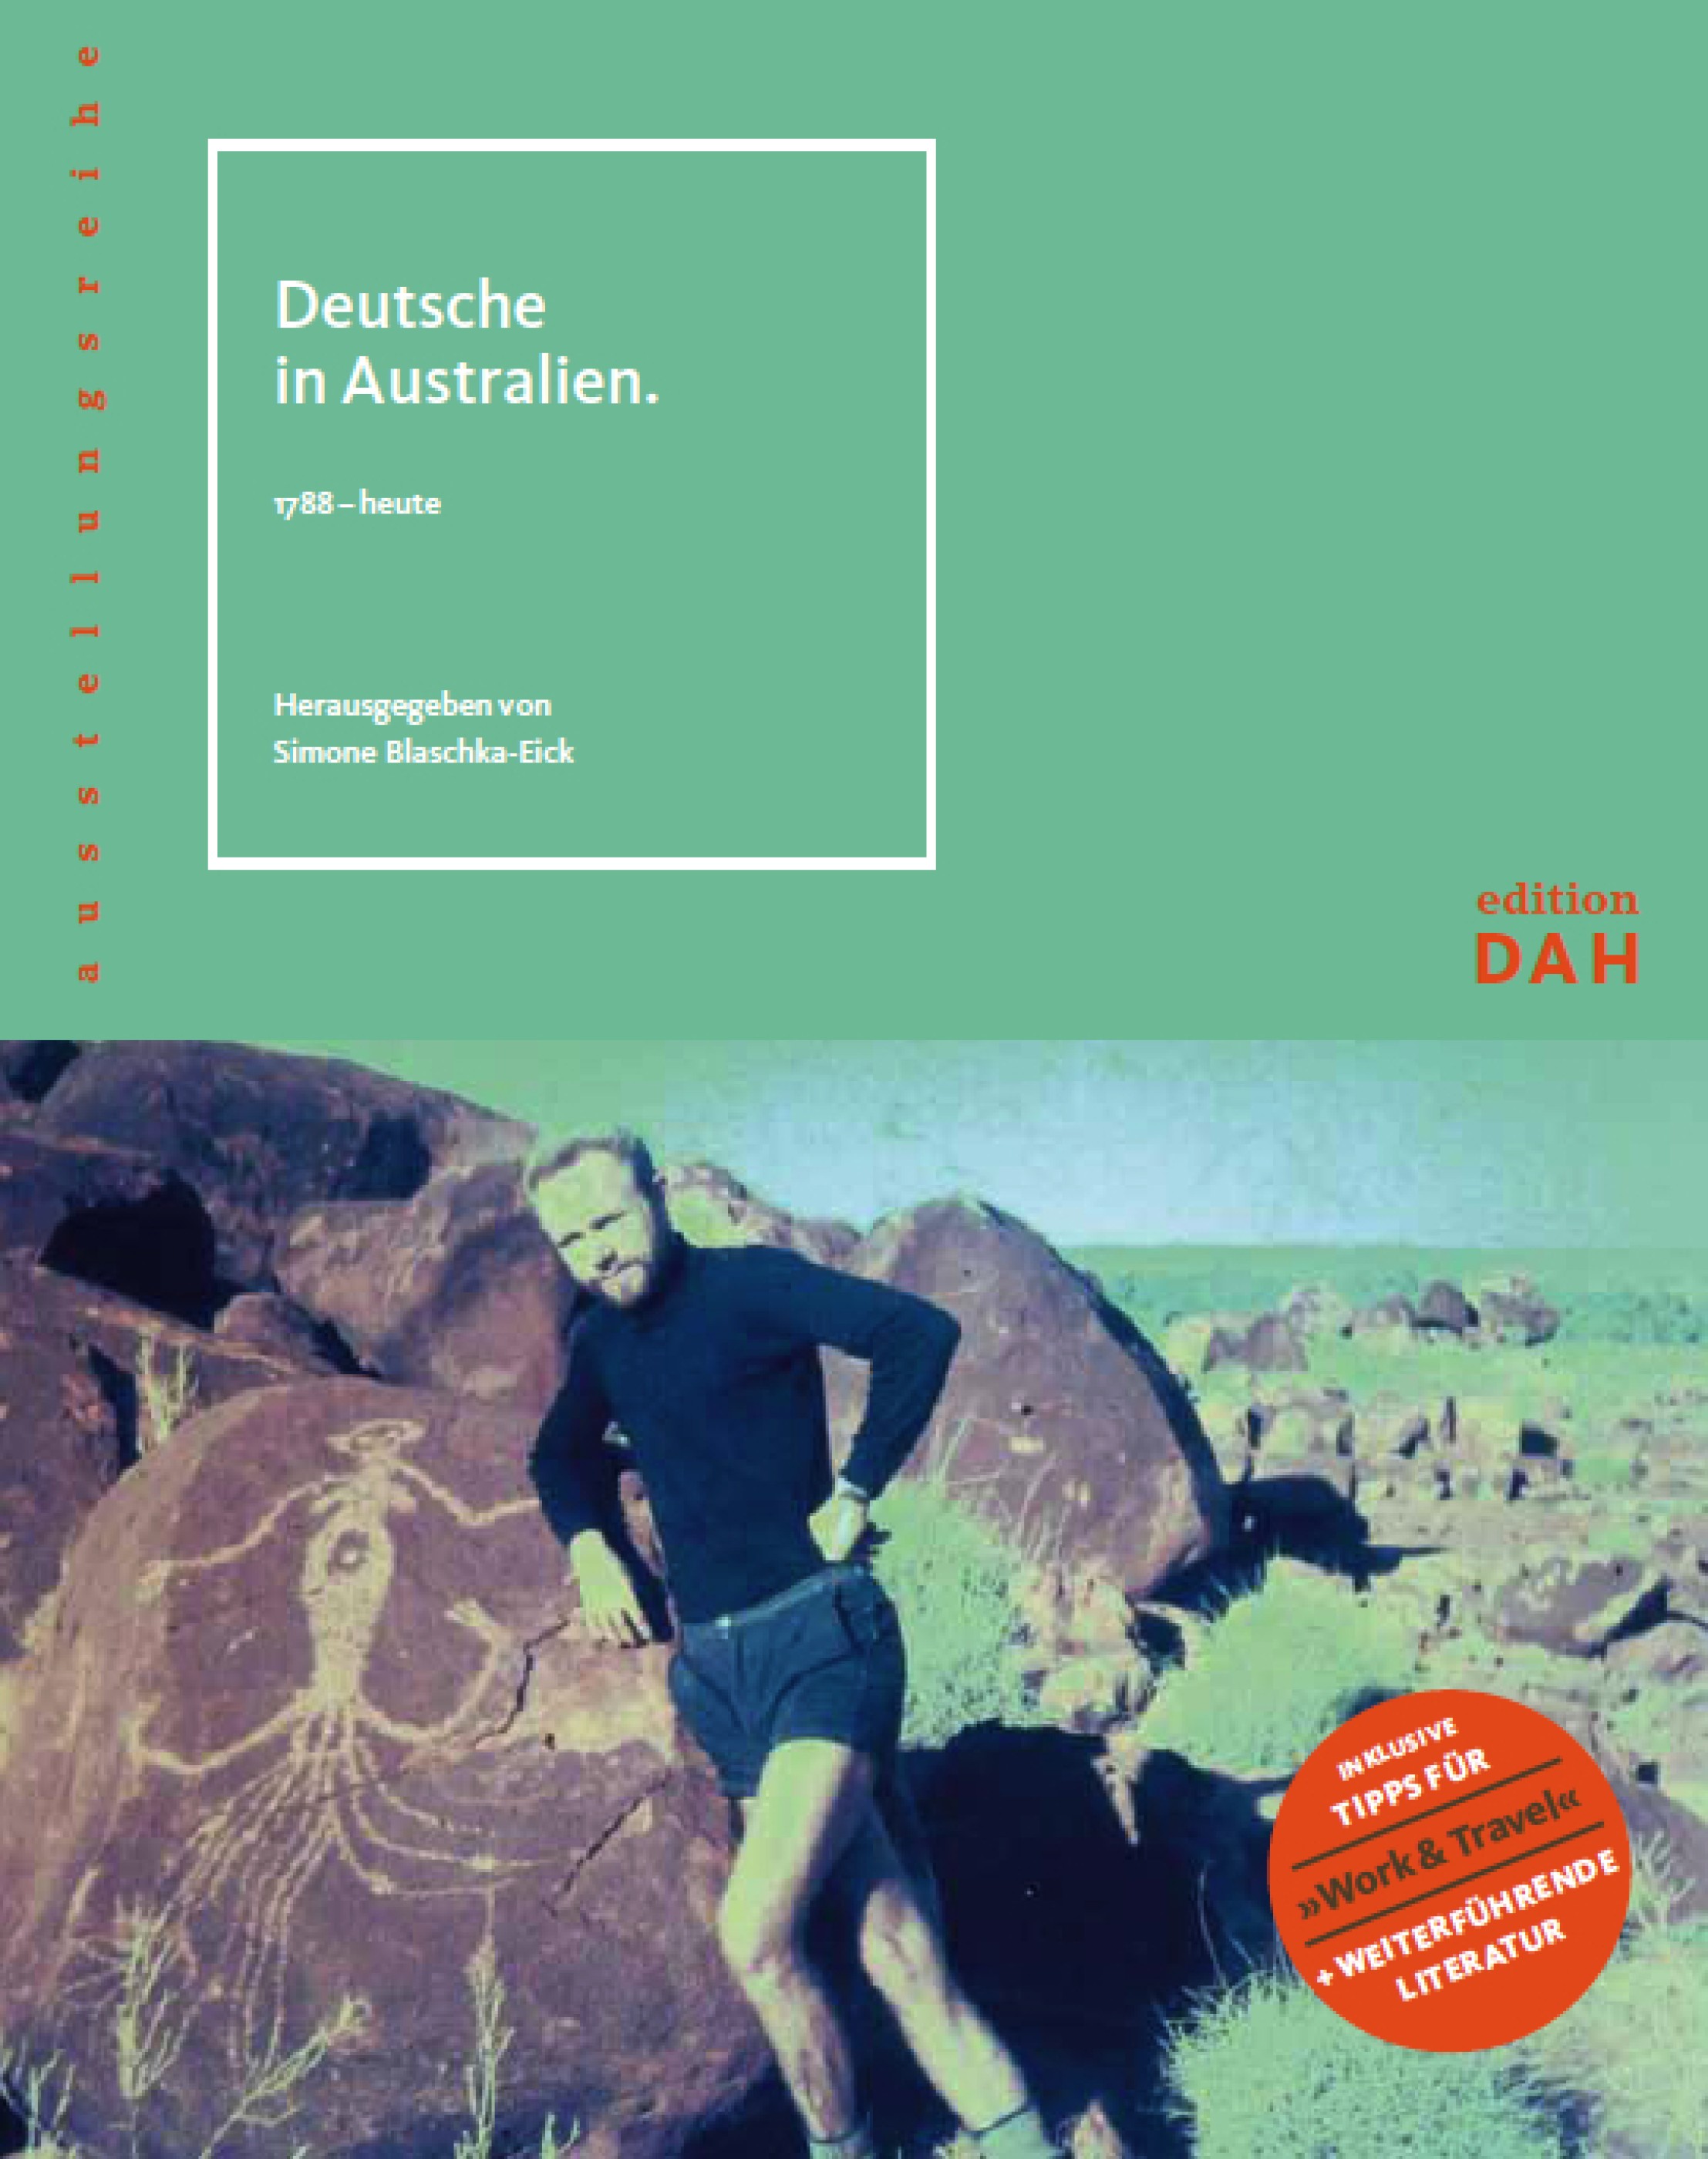 2-Deutsche-in-Australien-editionDAH-Deutsches-Auswandererhaus